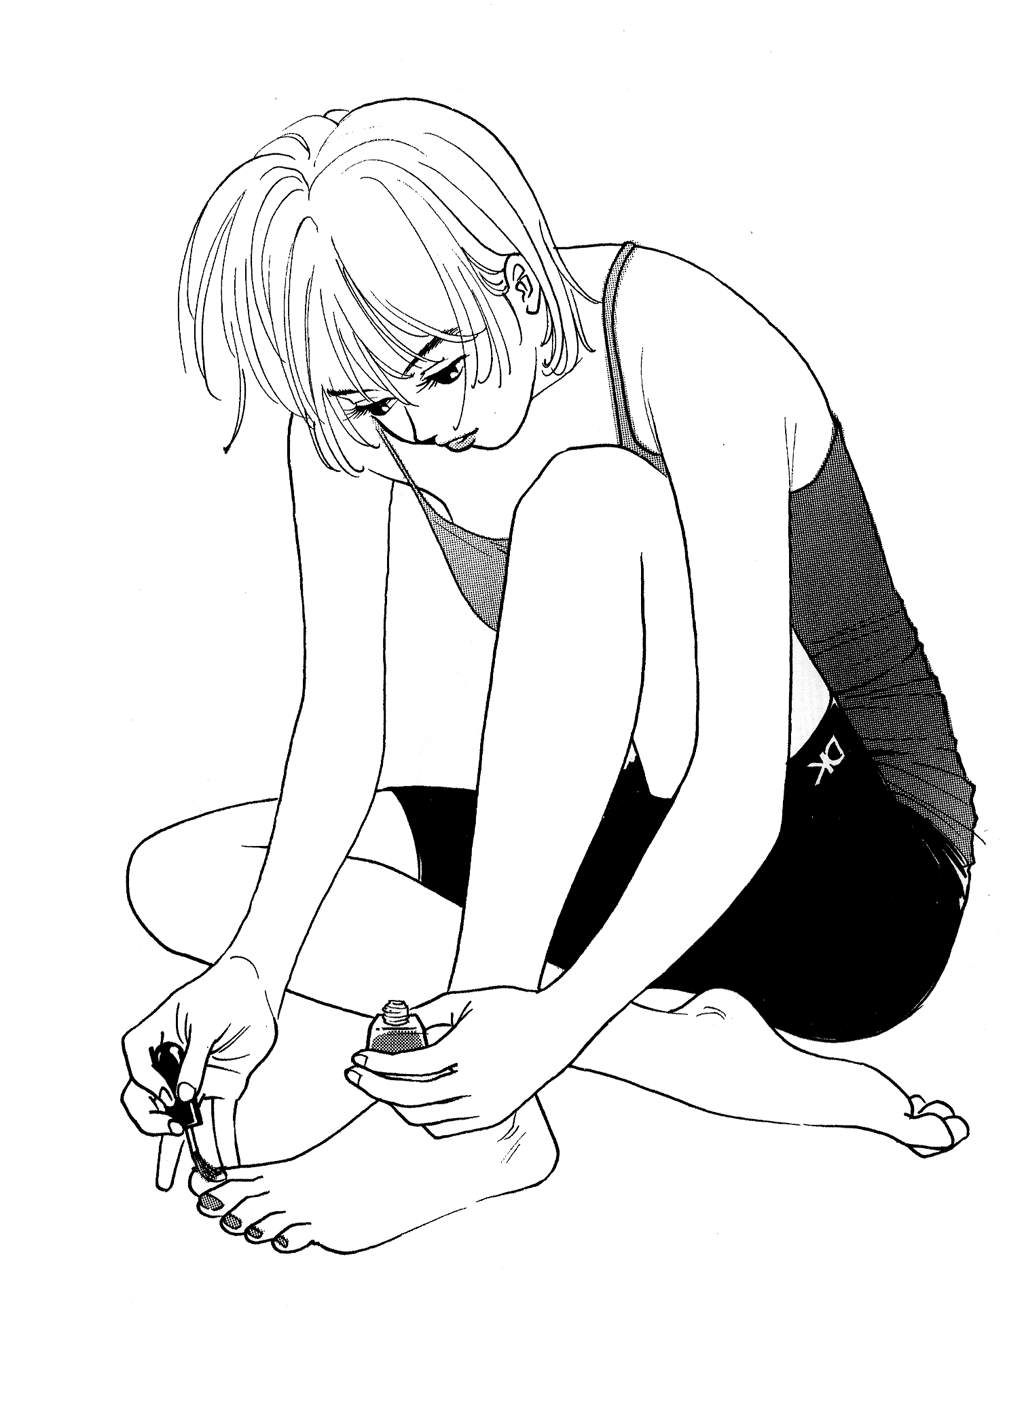 Le dessin du Manga 04 - Personnages feminin, Attitudes, Expressions numero d'image 125